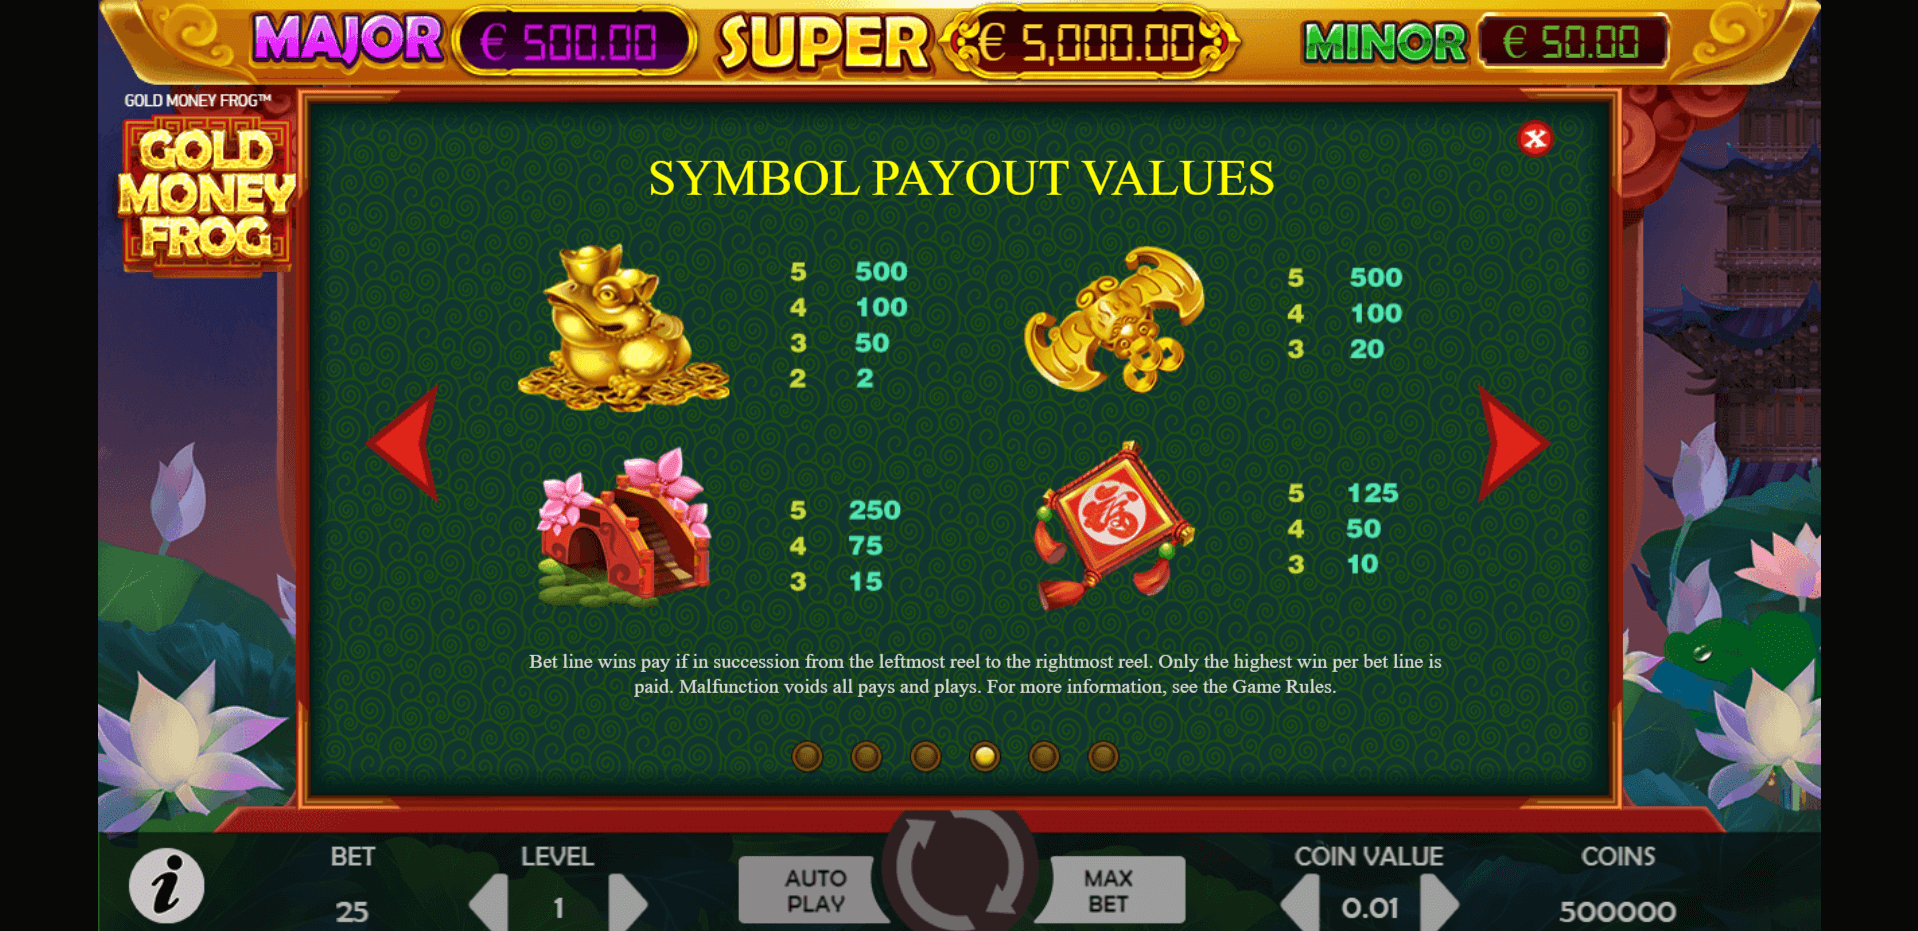 gold money frog slot machine detail image 3